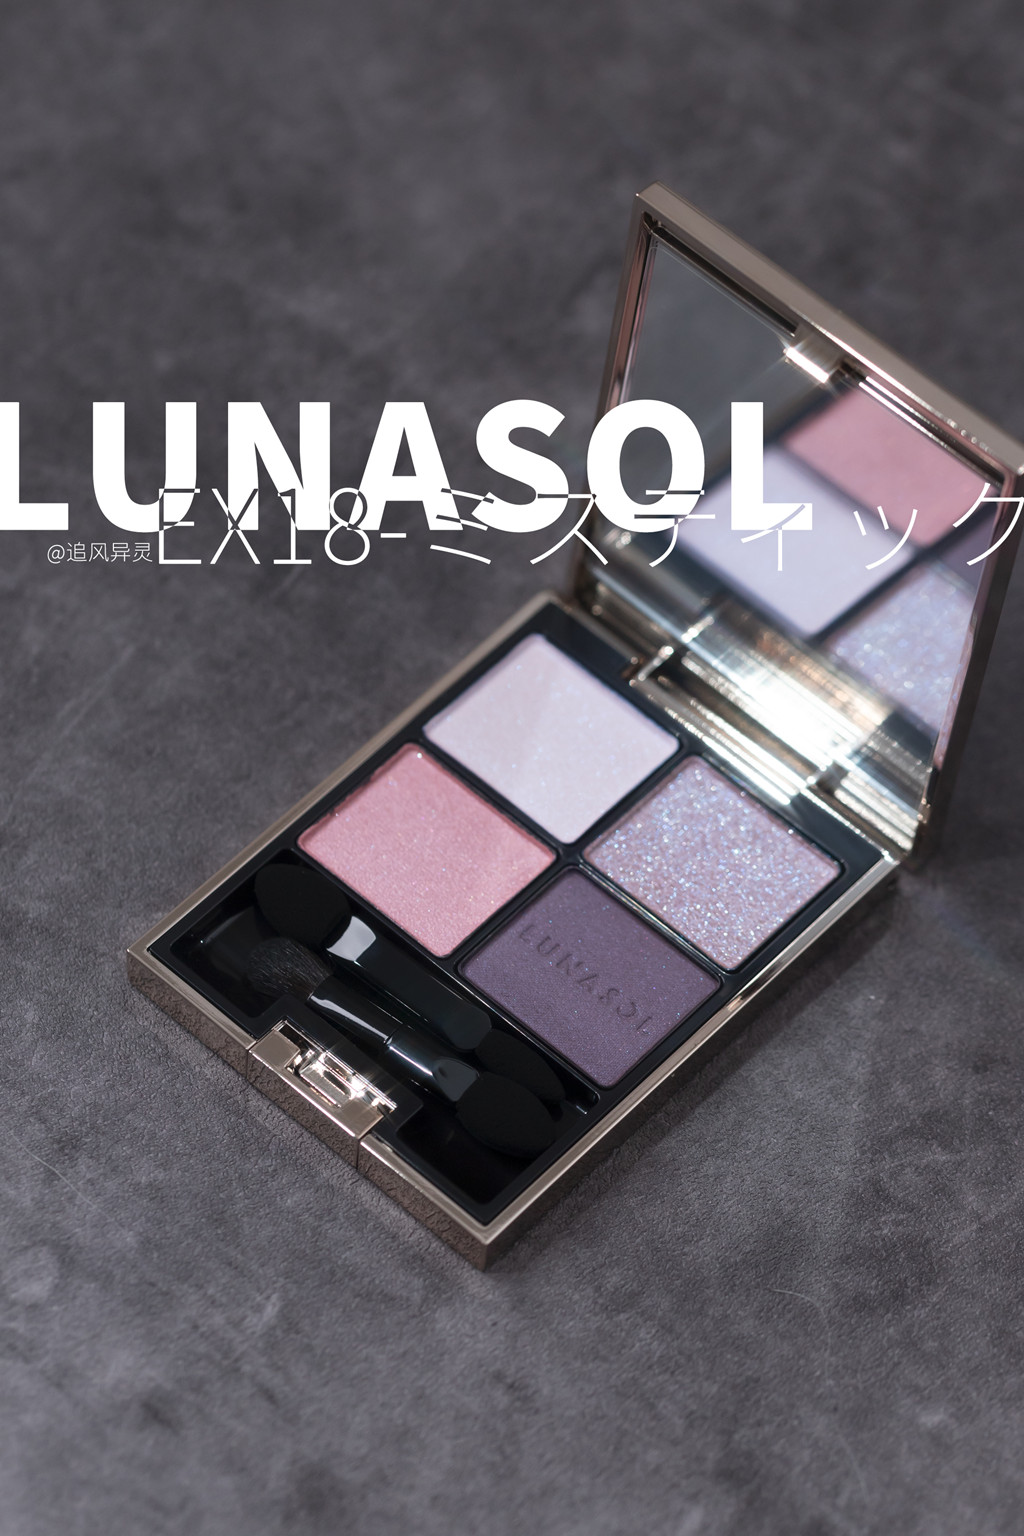 Lunasol 2021圣诞限定眼影EX18试色